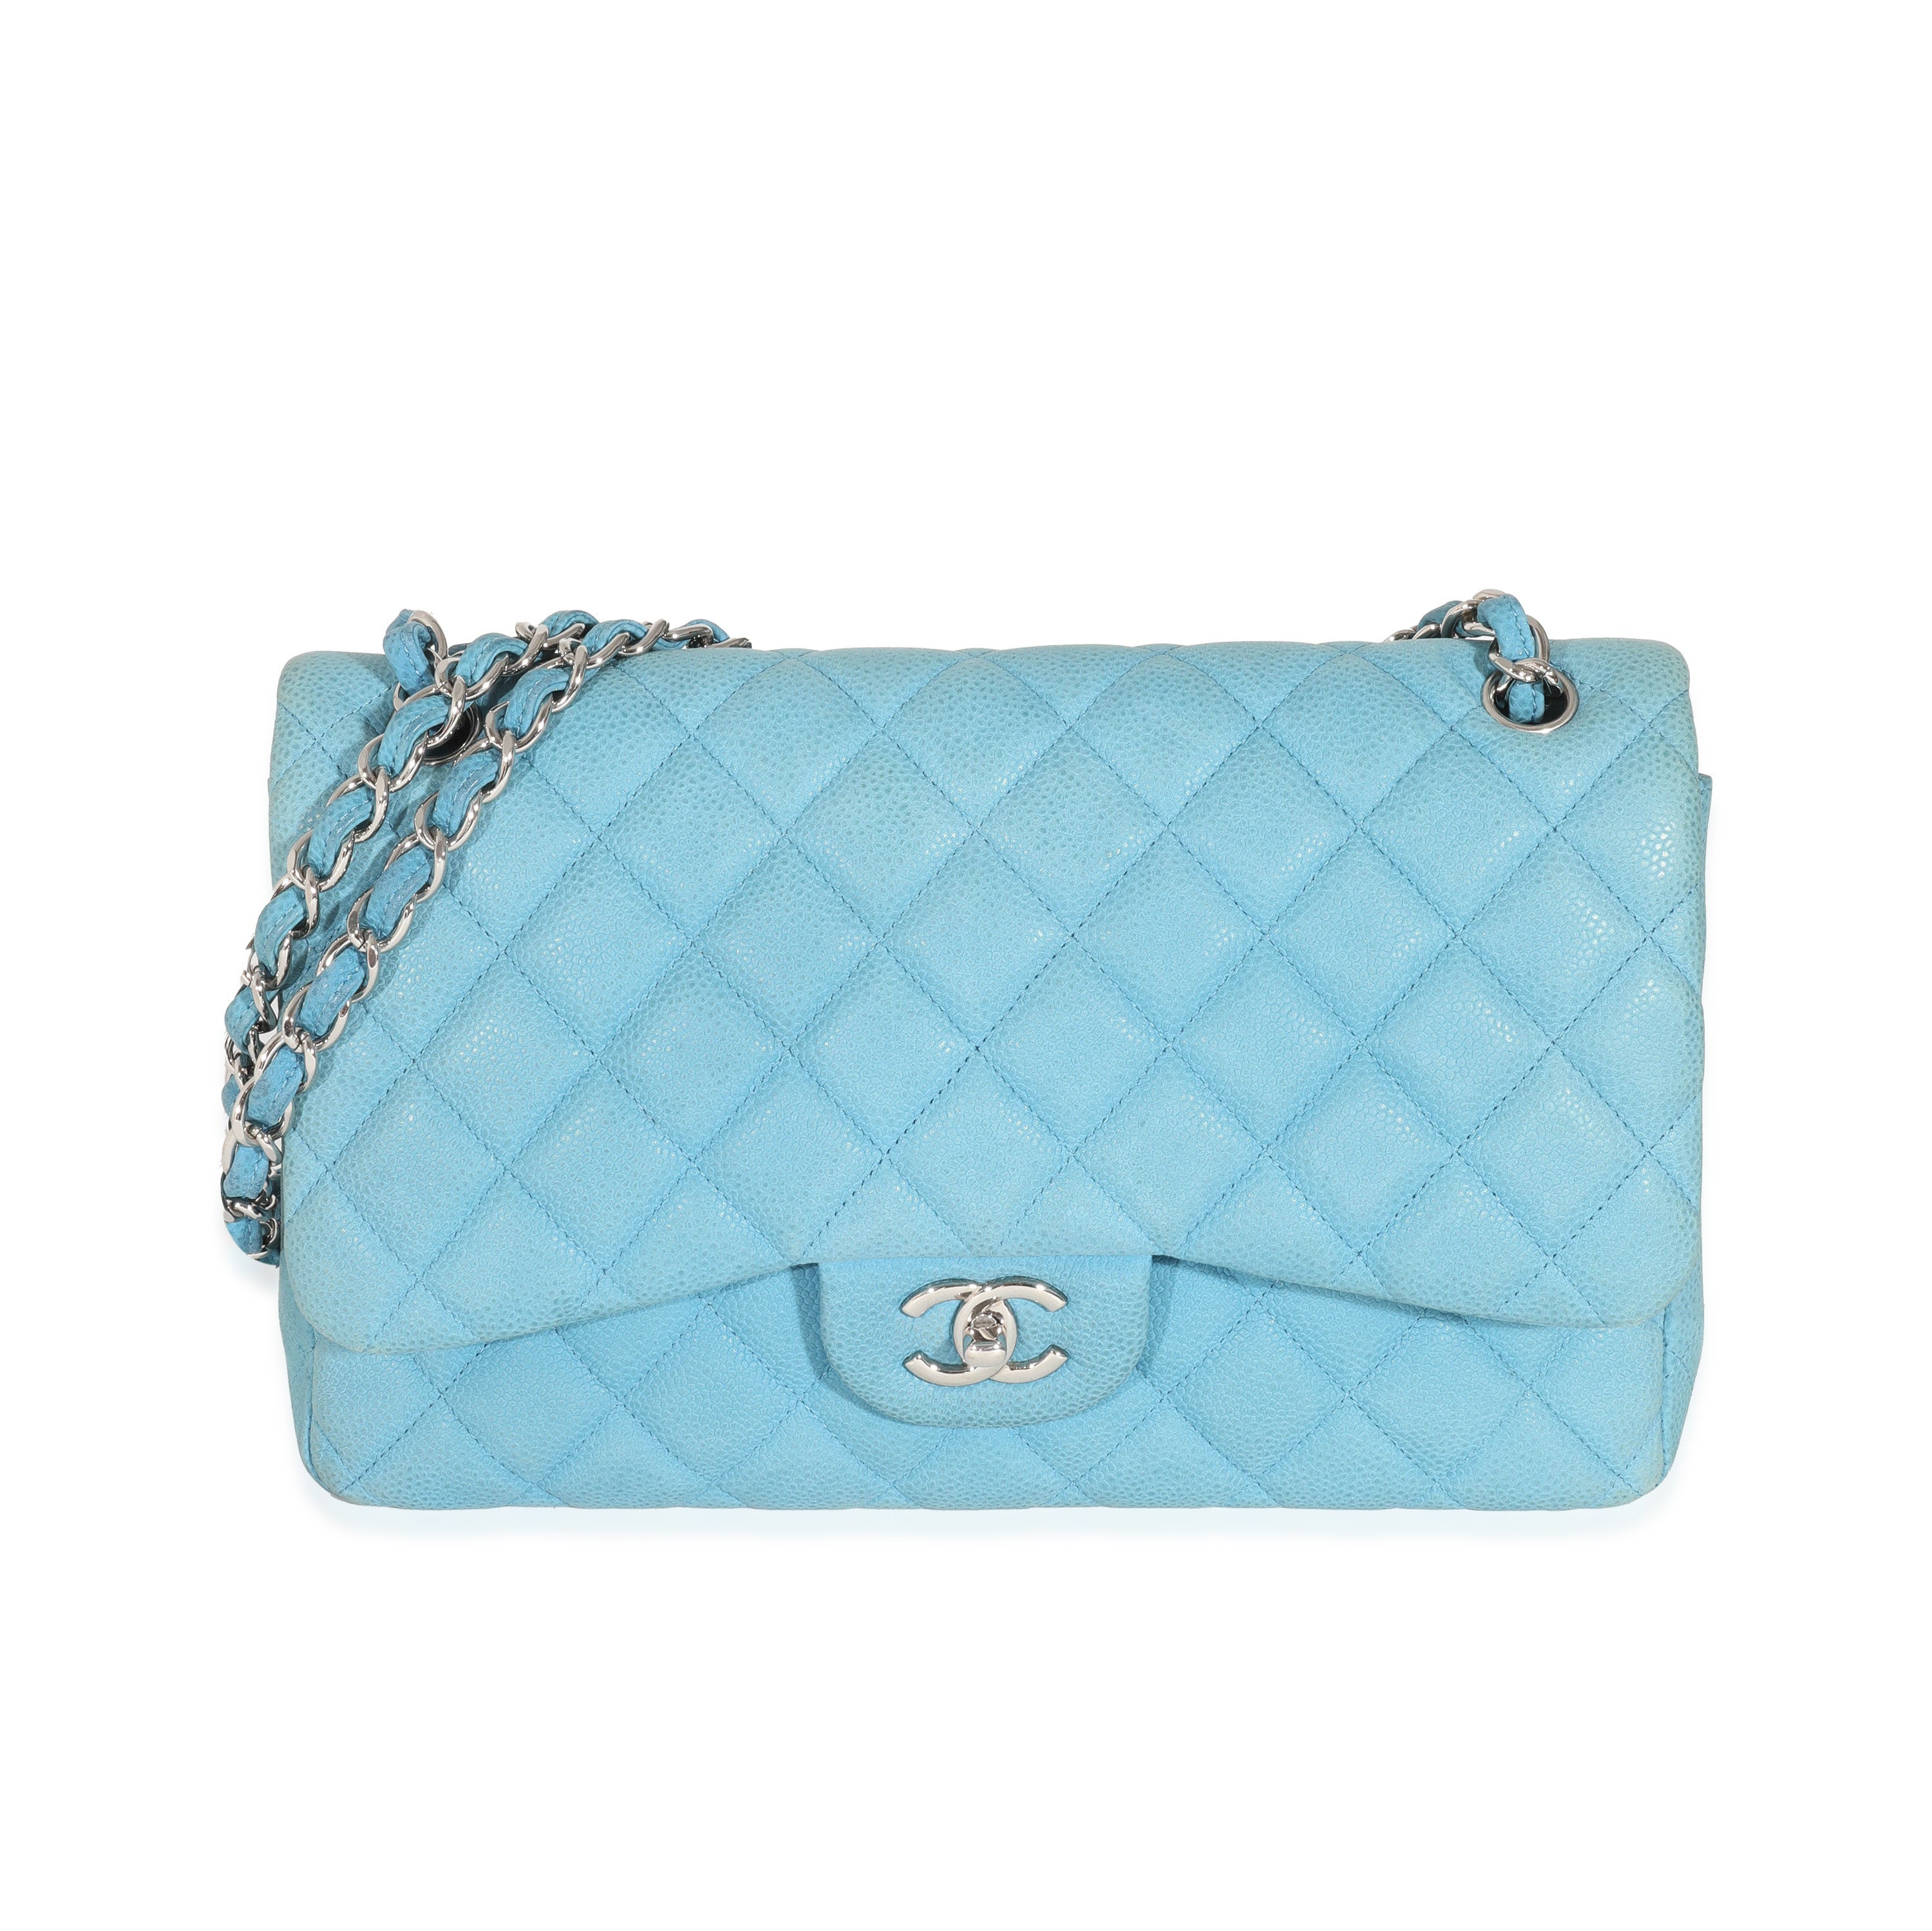 Iridescent Blue Quilted Calfskin Mini Rectangular Classic Flap Bag